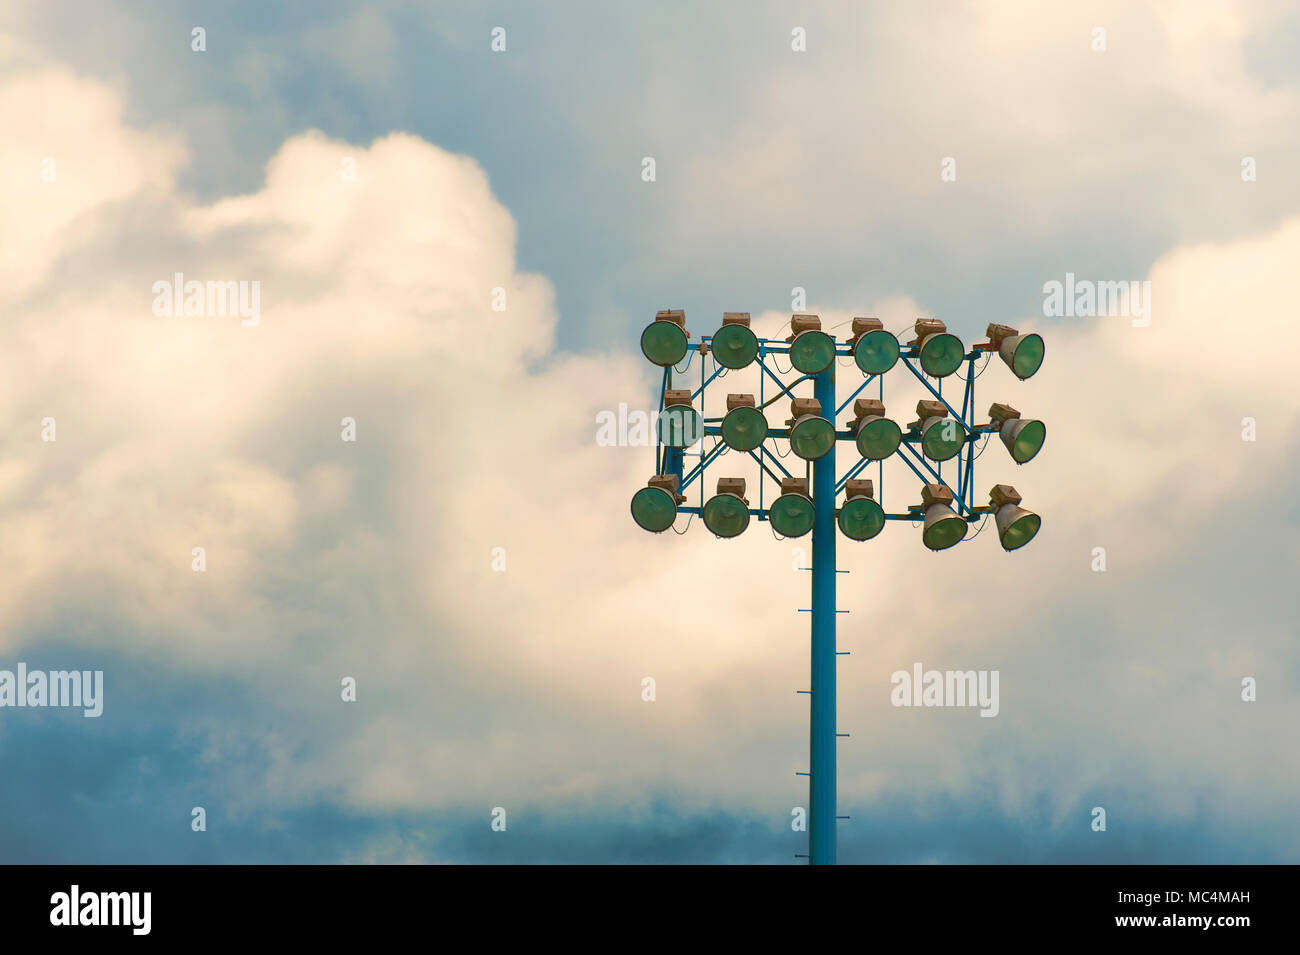 Minimalist of stadium lights against a cloudy sky Stock Photo